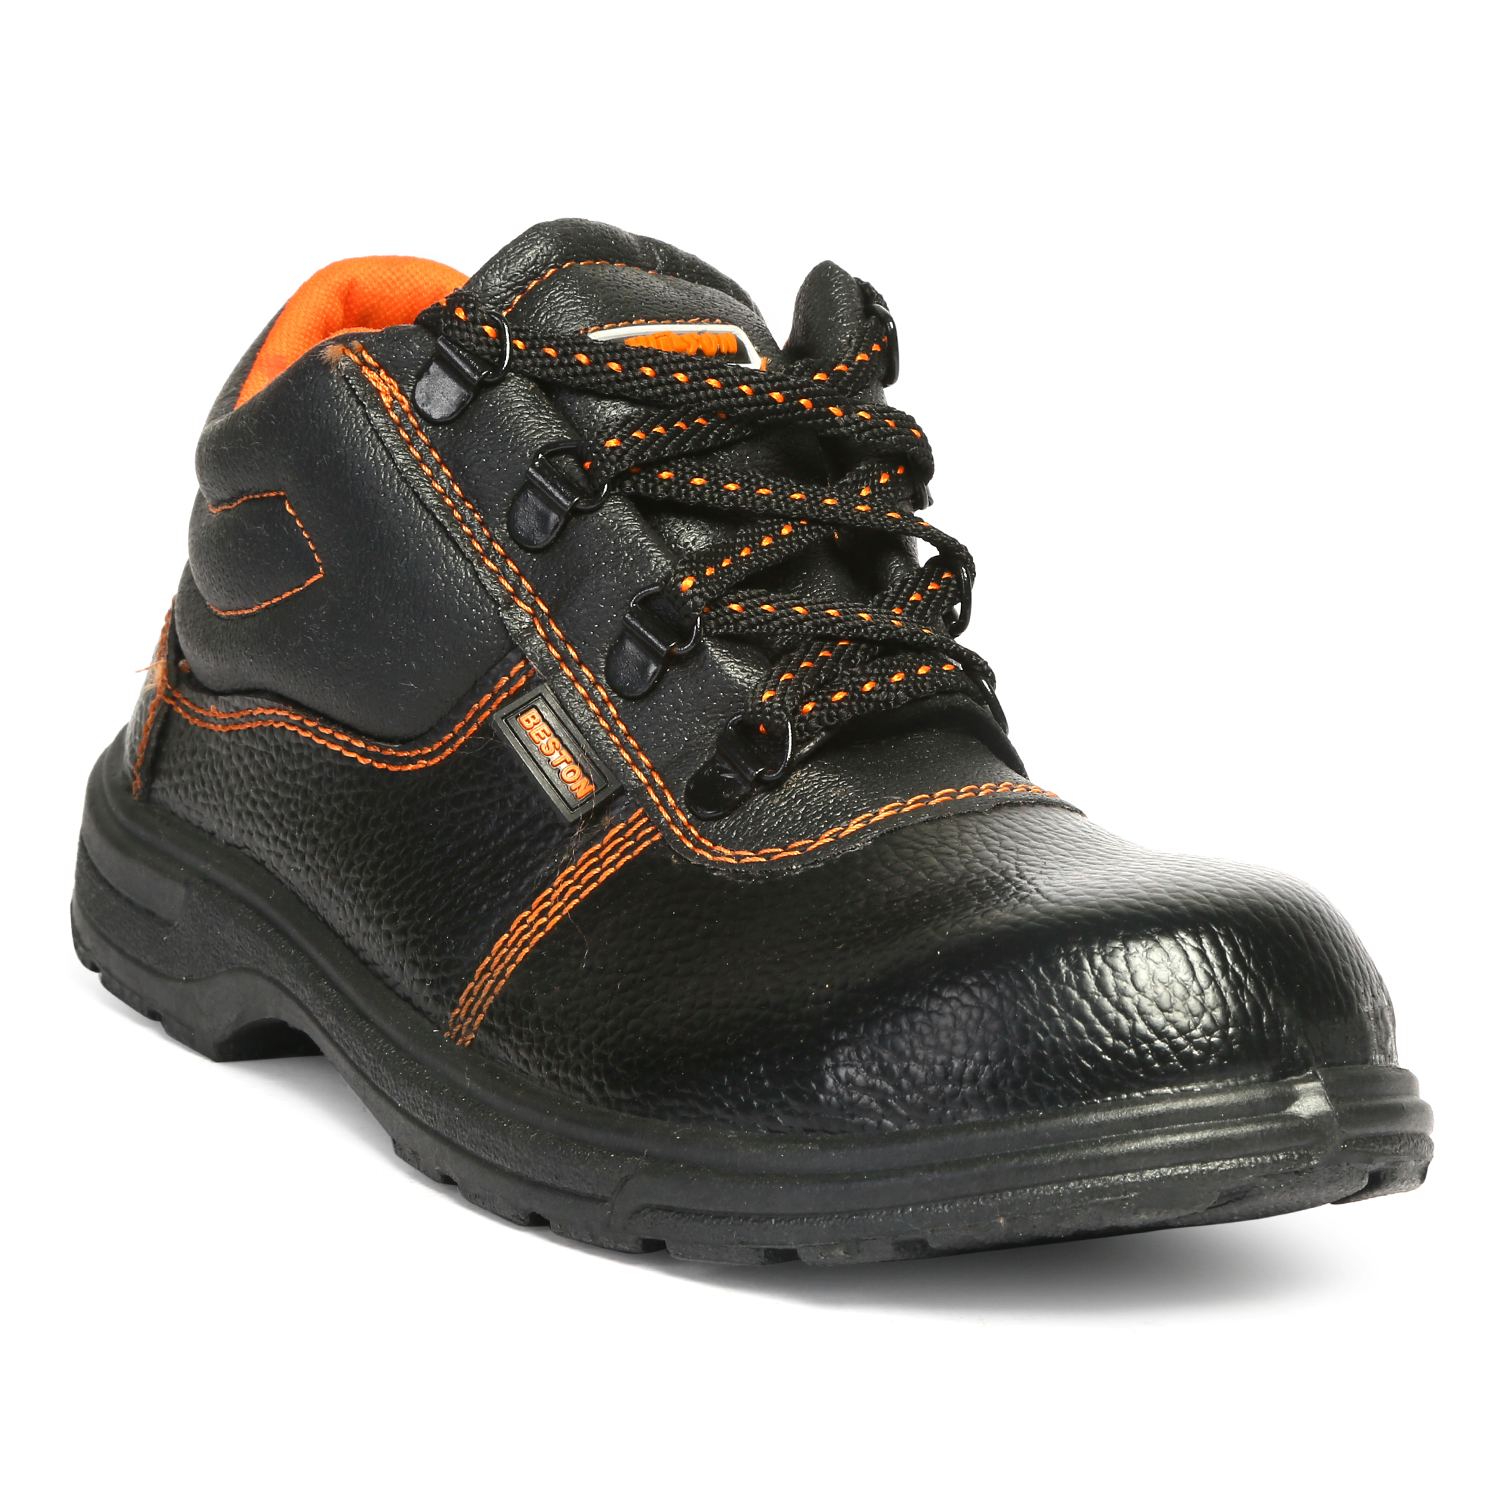 buy hillson beston safety shoes online MIXQWRC